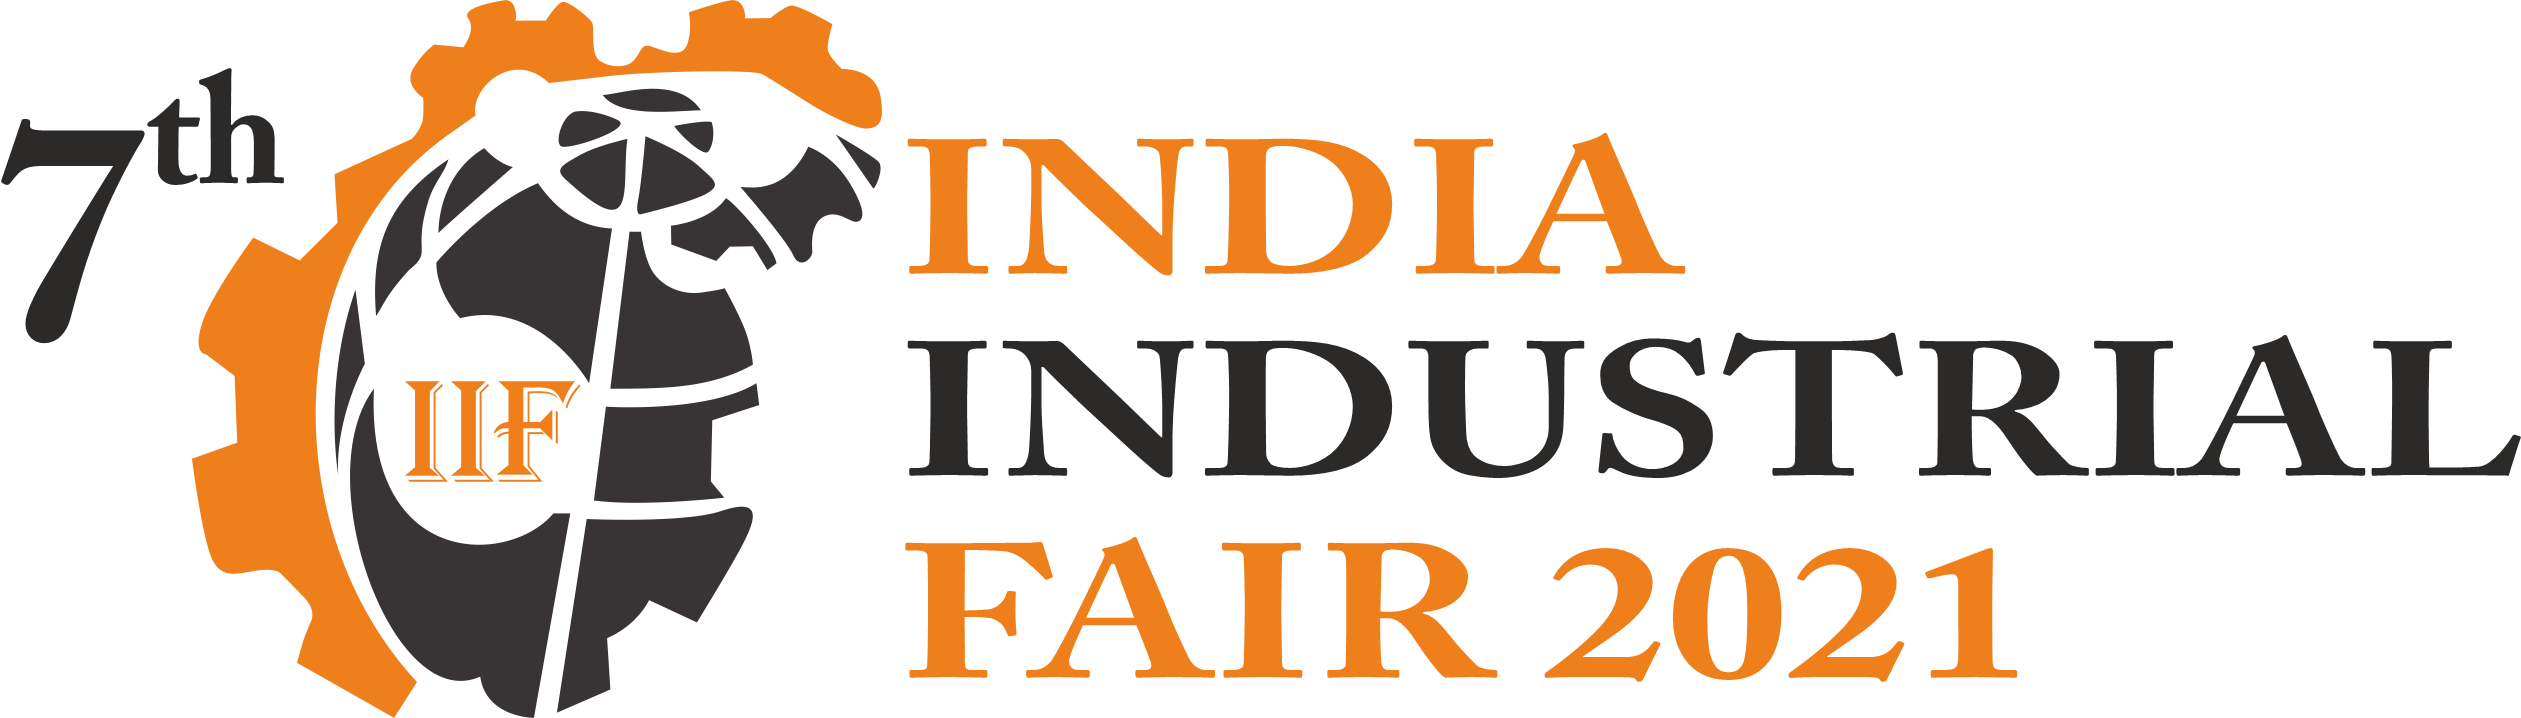 India industrial Fair